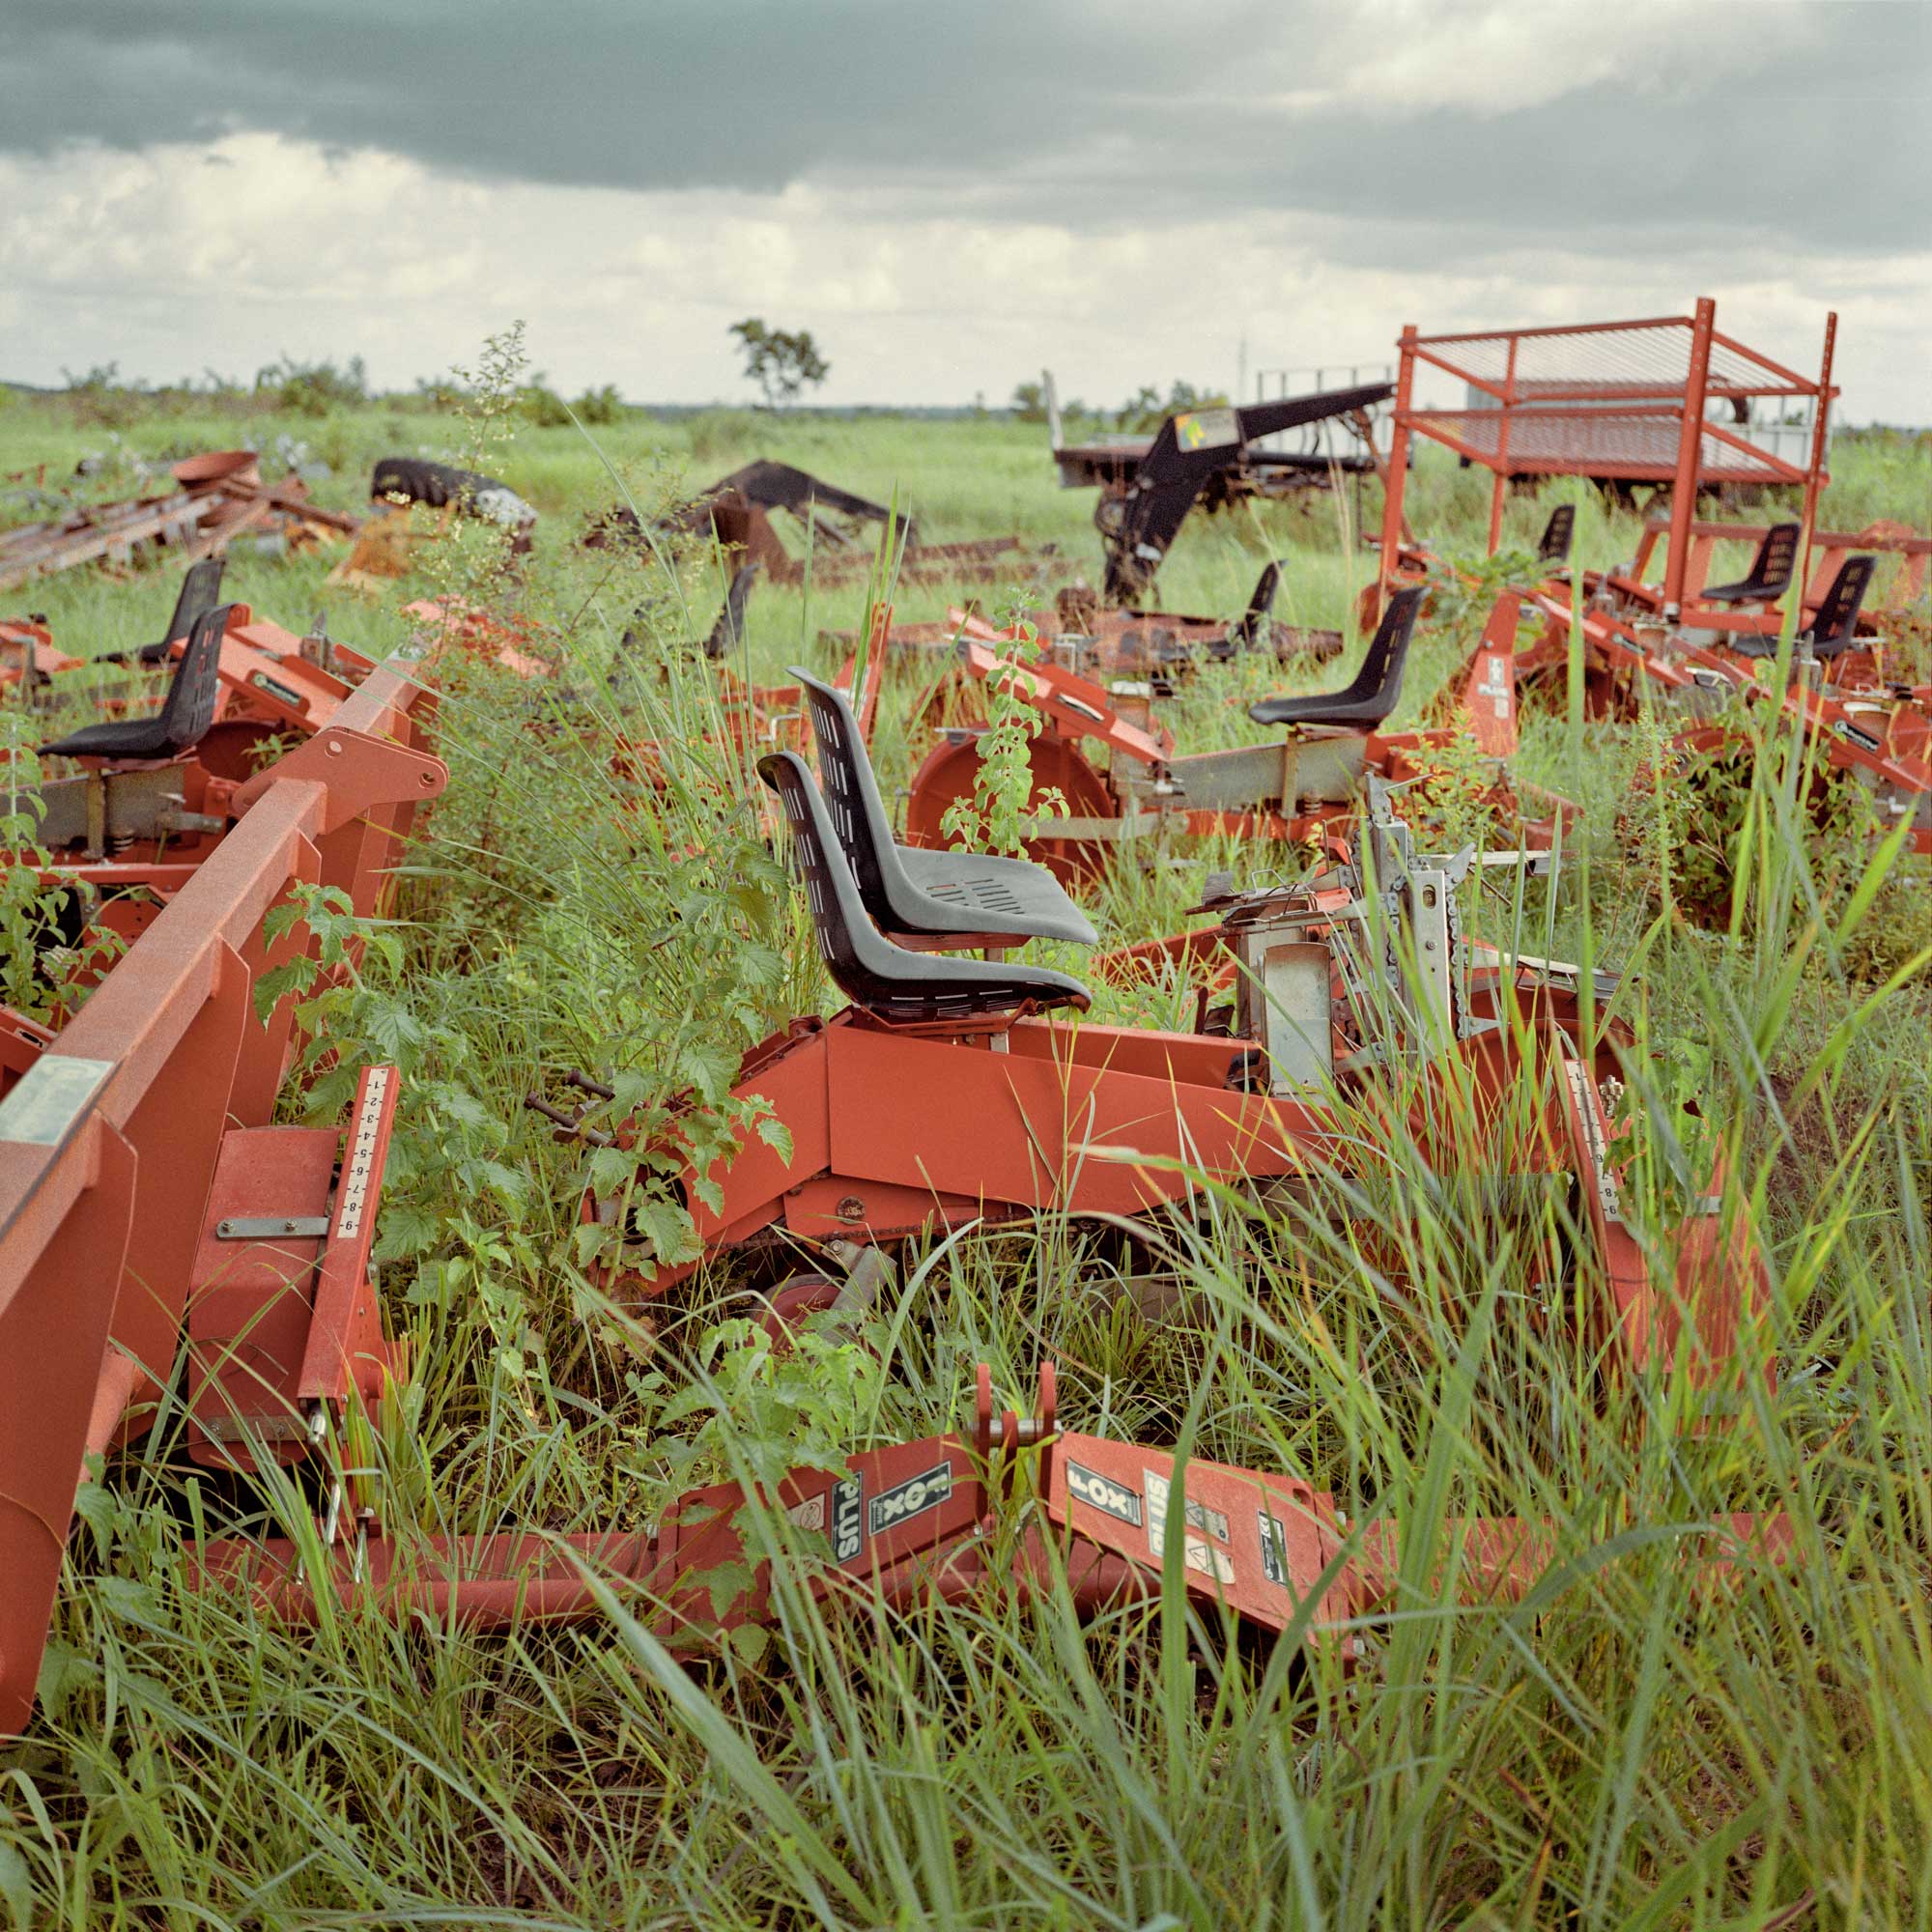 Abandoned tractors, Kpachaa, Northern Region, Ghana. 2013. (Peter DiCampo)